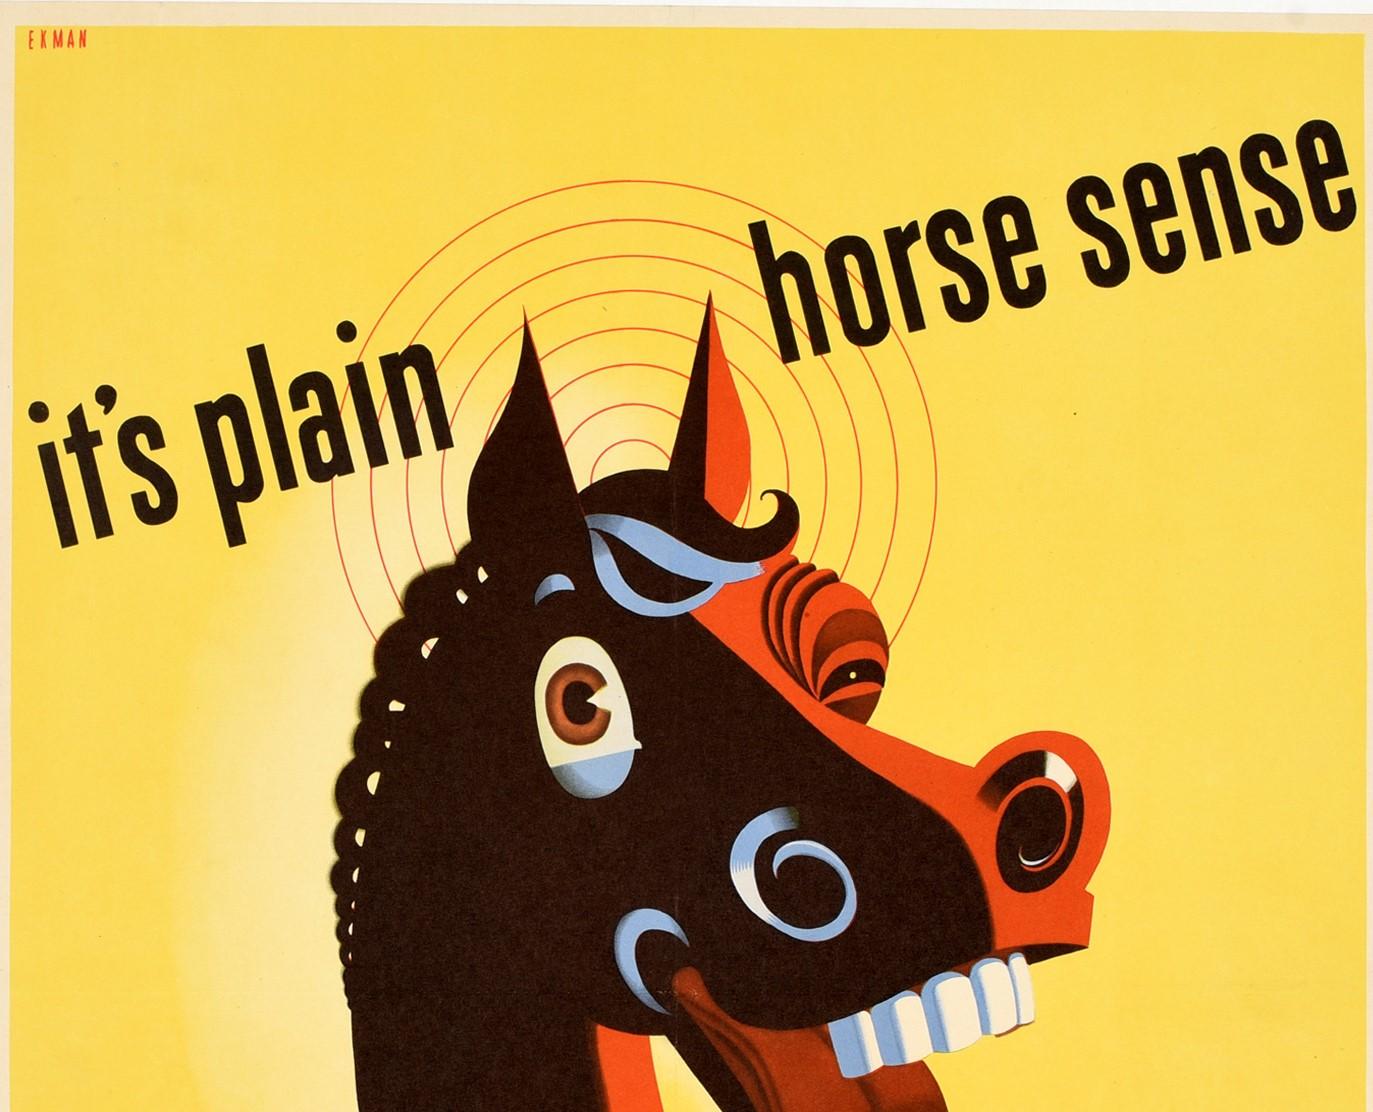 Original Vintage Poster Plain Horse Sense Act Think Safety War Industries WWII - Print by Stanley Ekman